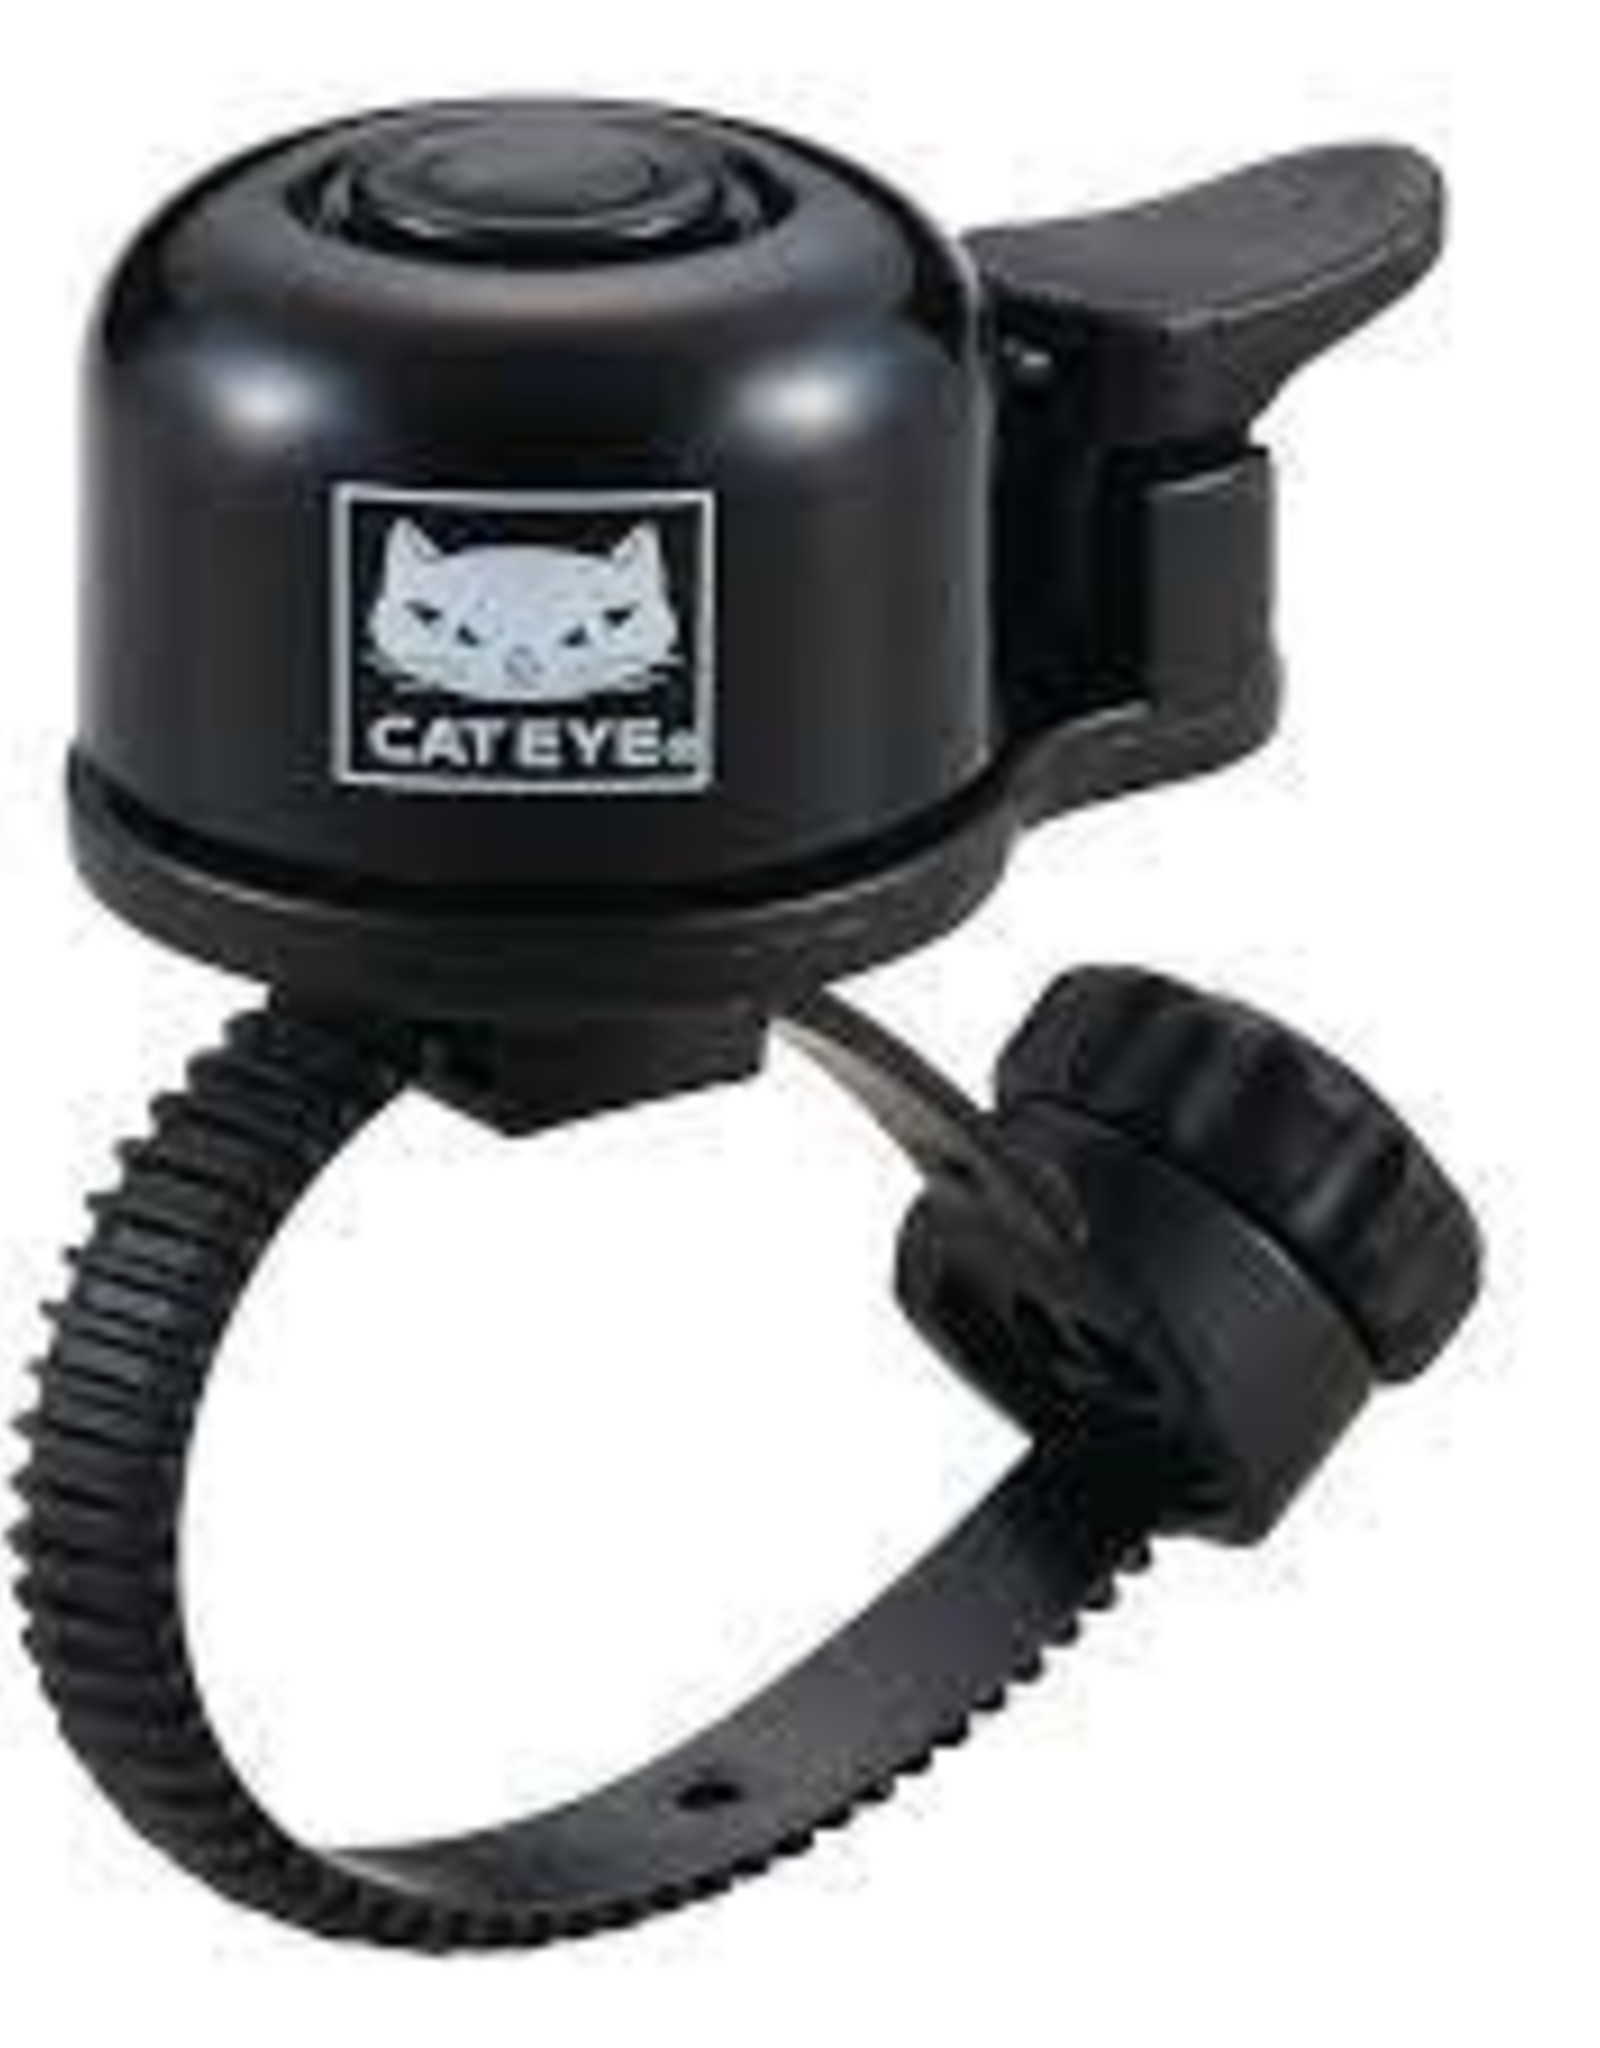 Cat Eye Cat Eye, OH-1400 FlexTight, Bell, Black